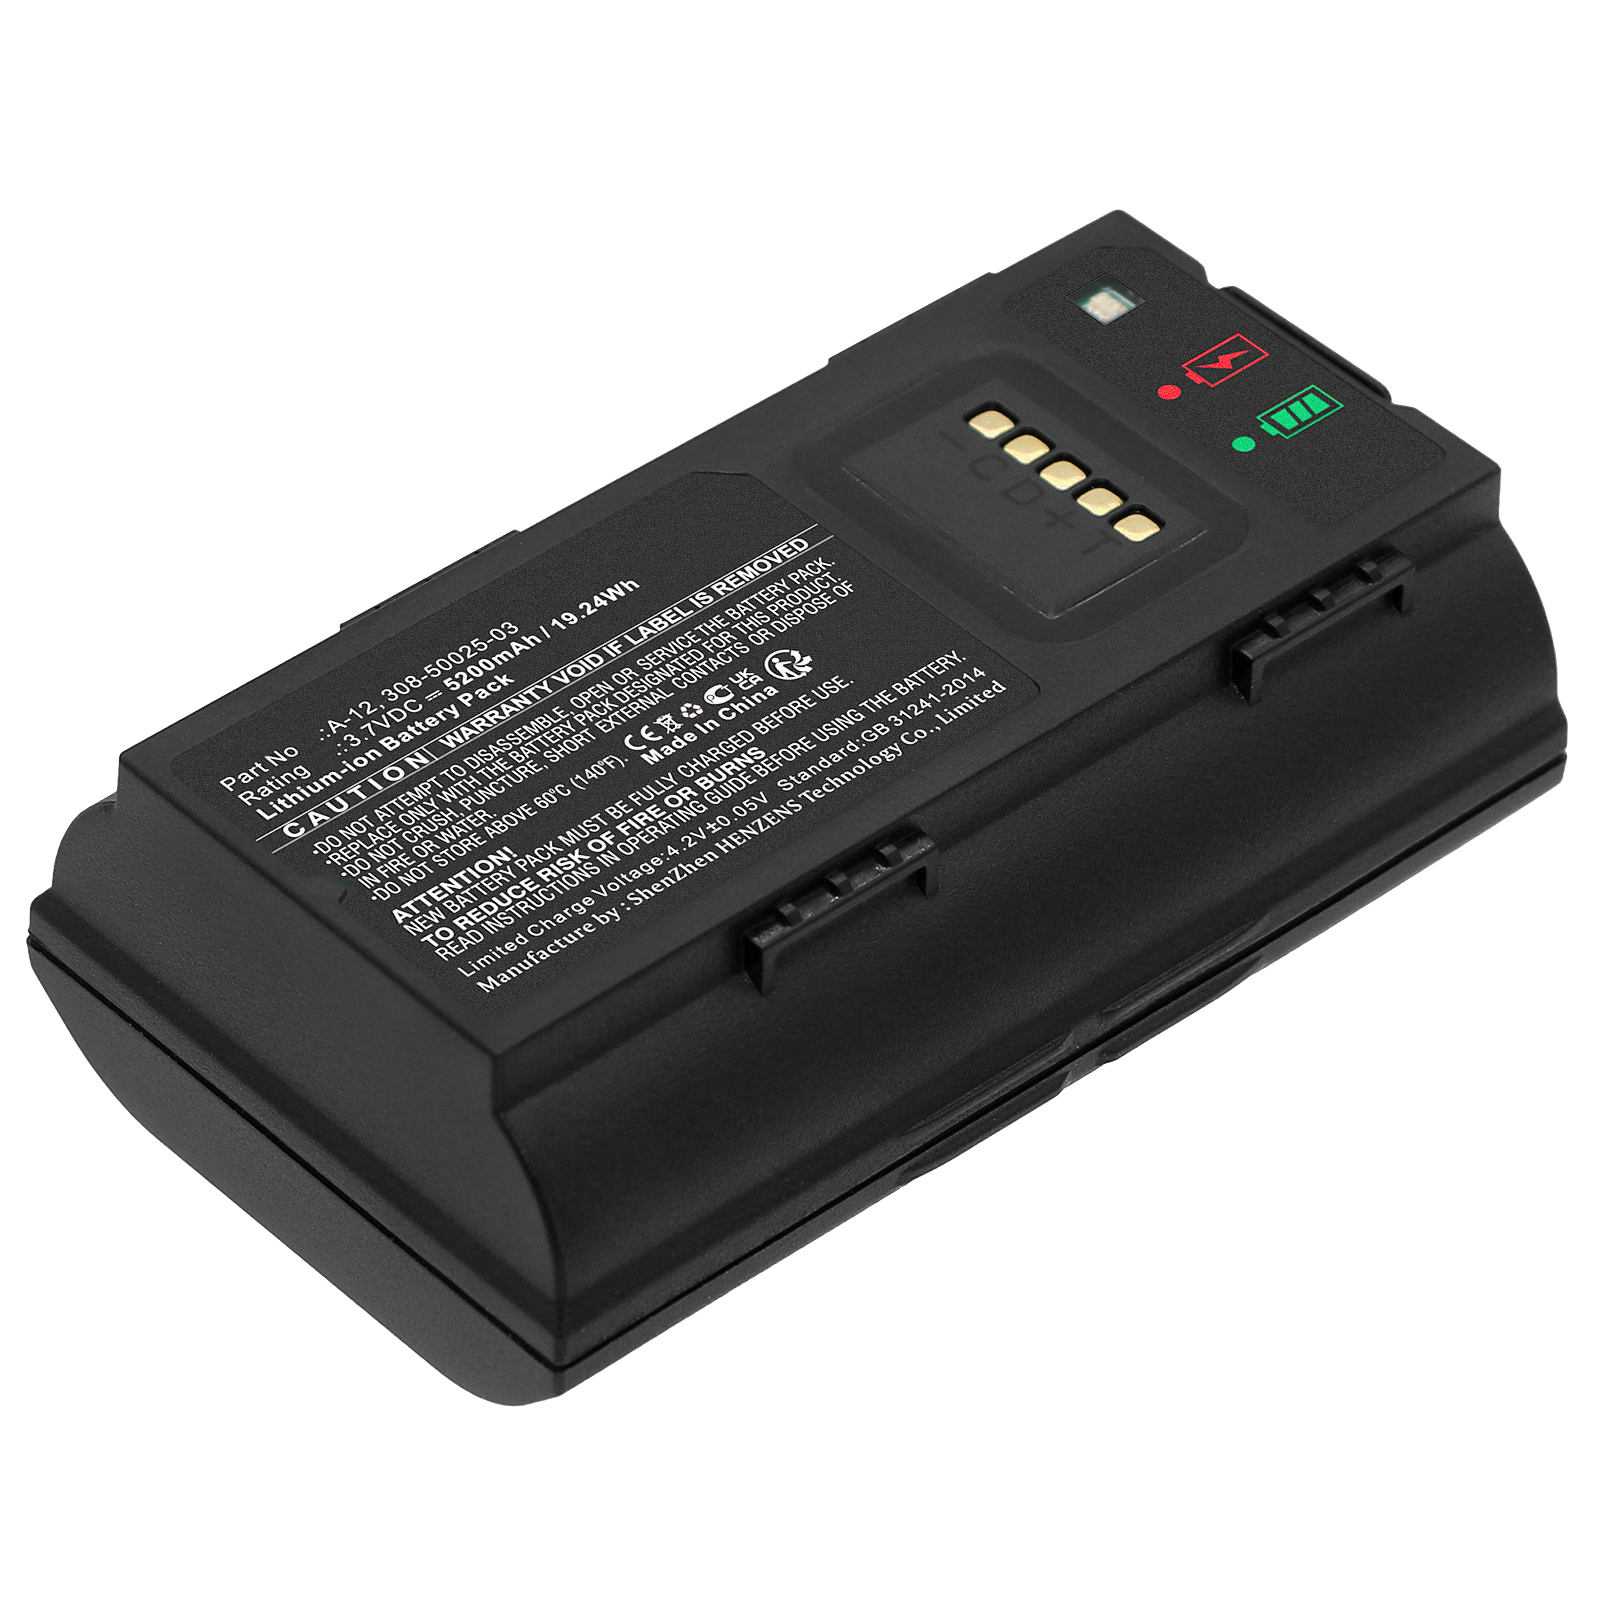 Synergy Digital Home Security Camera Battery, Compatible with Arlo 308-50025-03 Home Security Camera Battery (Li-ion, 3.7V, 5200mAh)